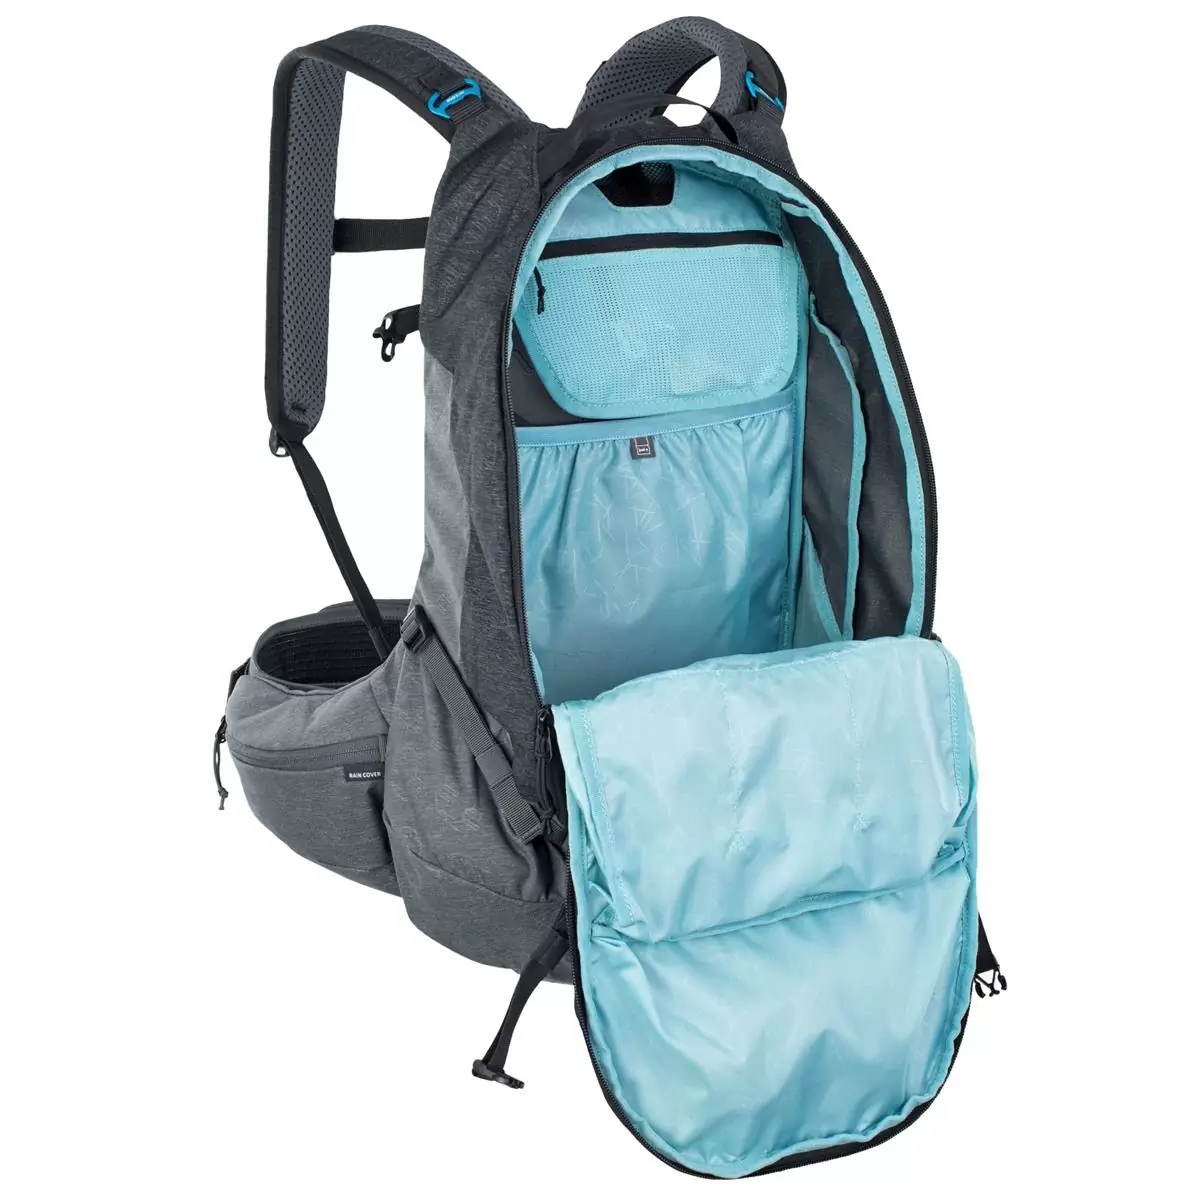 Backpack Trail Pro 26 litri black - carbon grey size L/XL #3